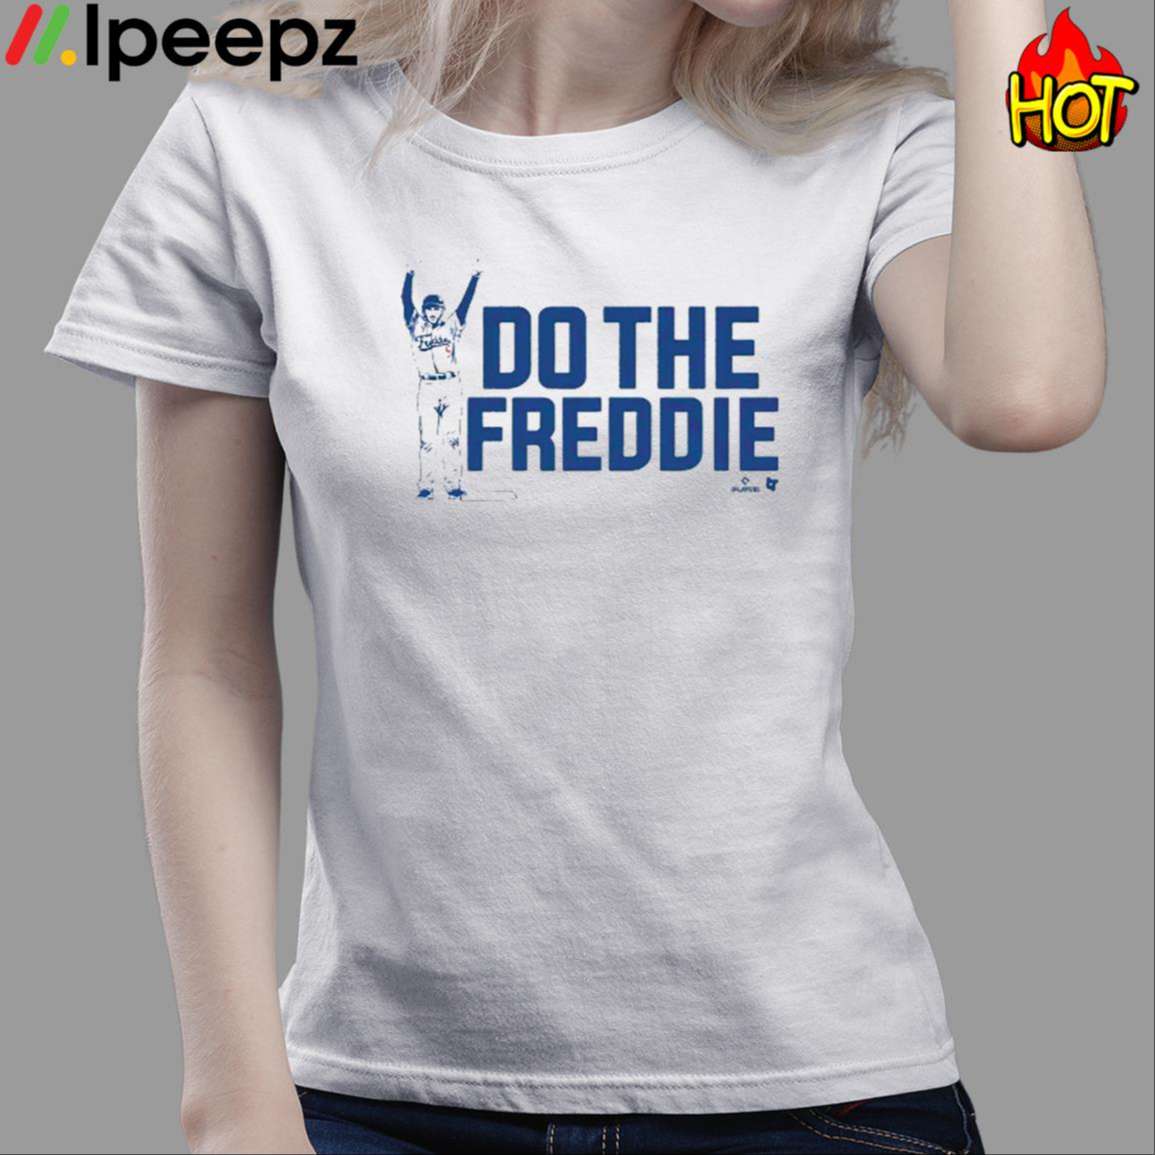 freddie freeman women's jersey